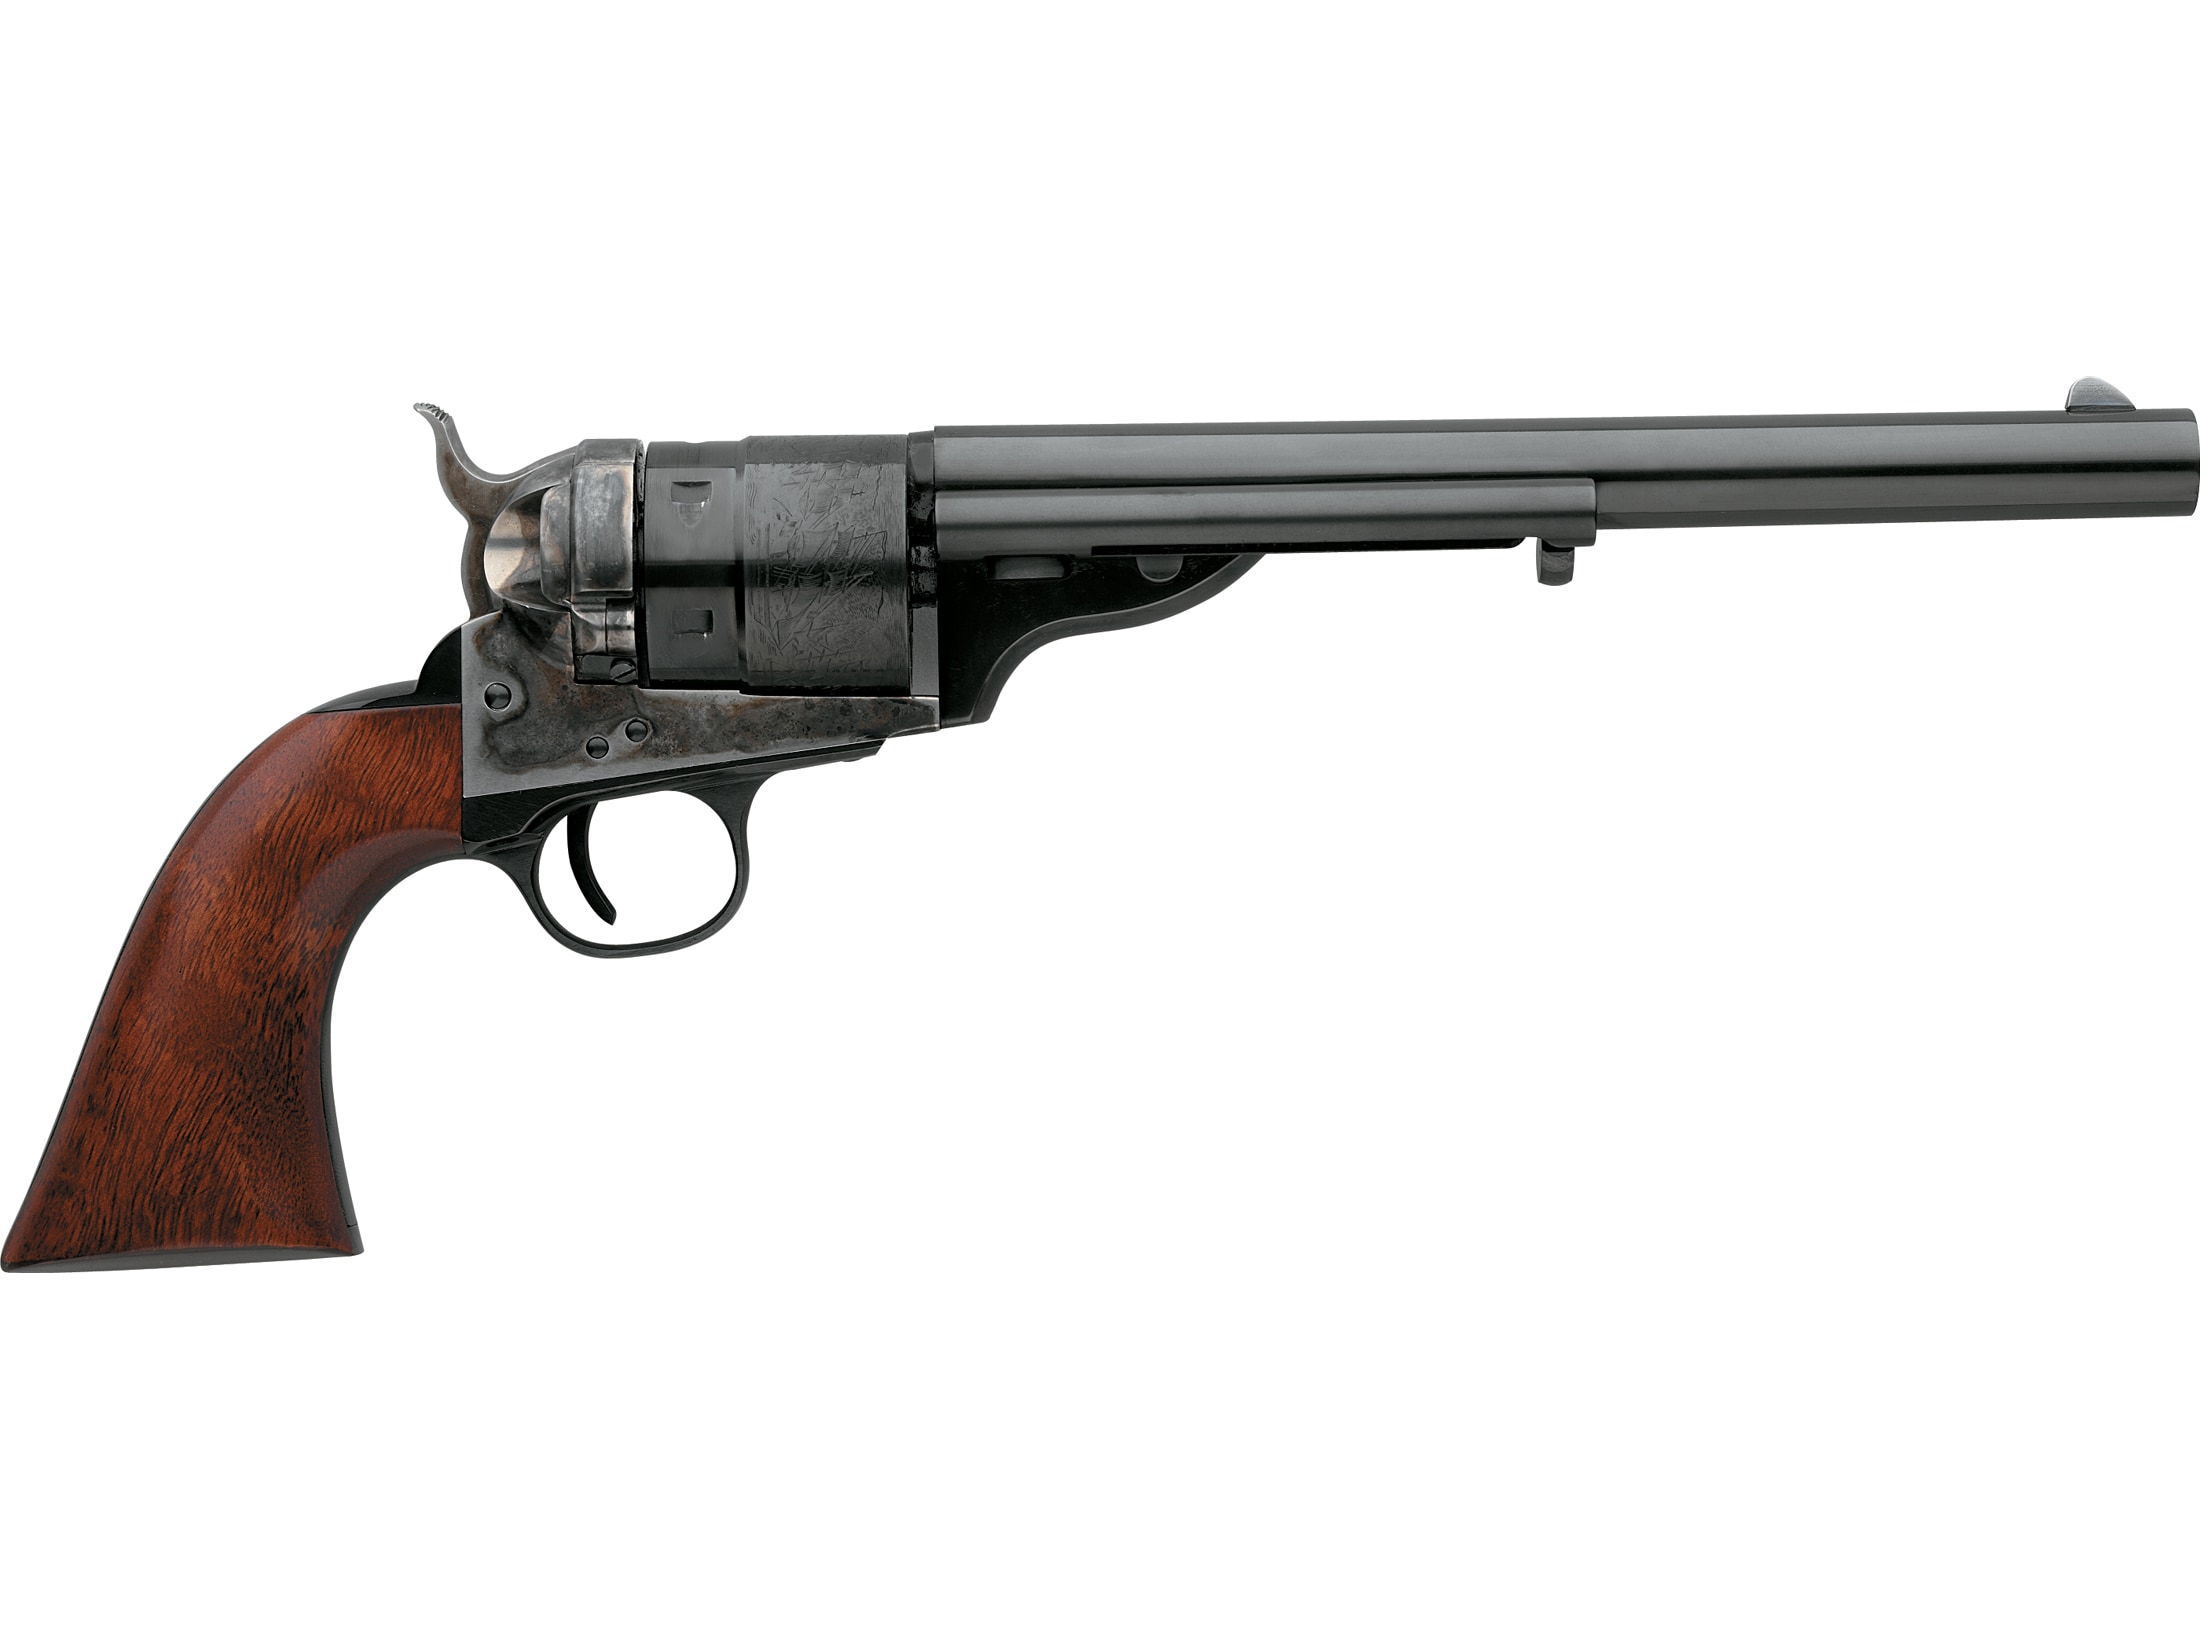 Image of Taylor's & Co C. Mason 1860 Army Single Action Revolver 45 Colt (Long Colt) 8" Blued Barrel Case Hardened Steel Frame Walnut Grips 6 Round